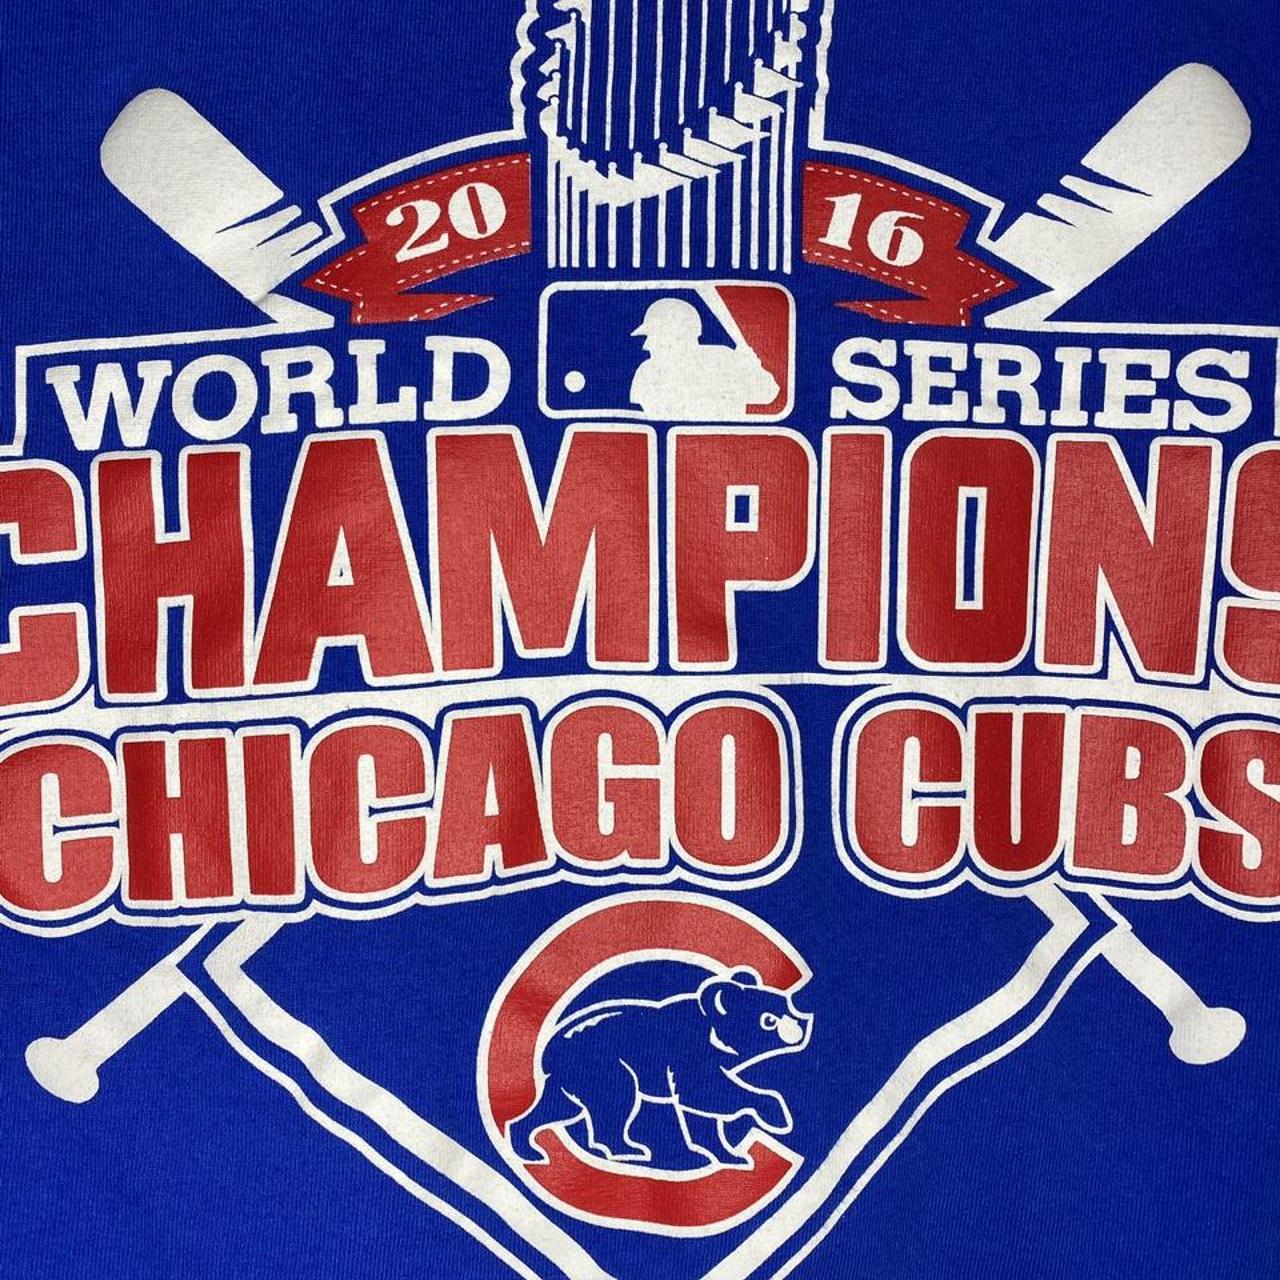 Chicago Cubs shirt 2016 World Series Champions - Depop